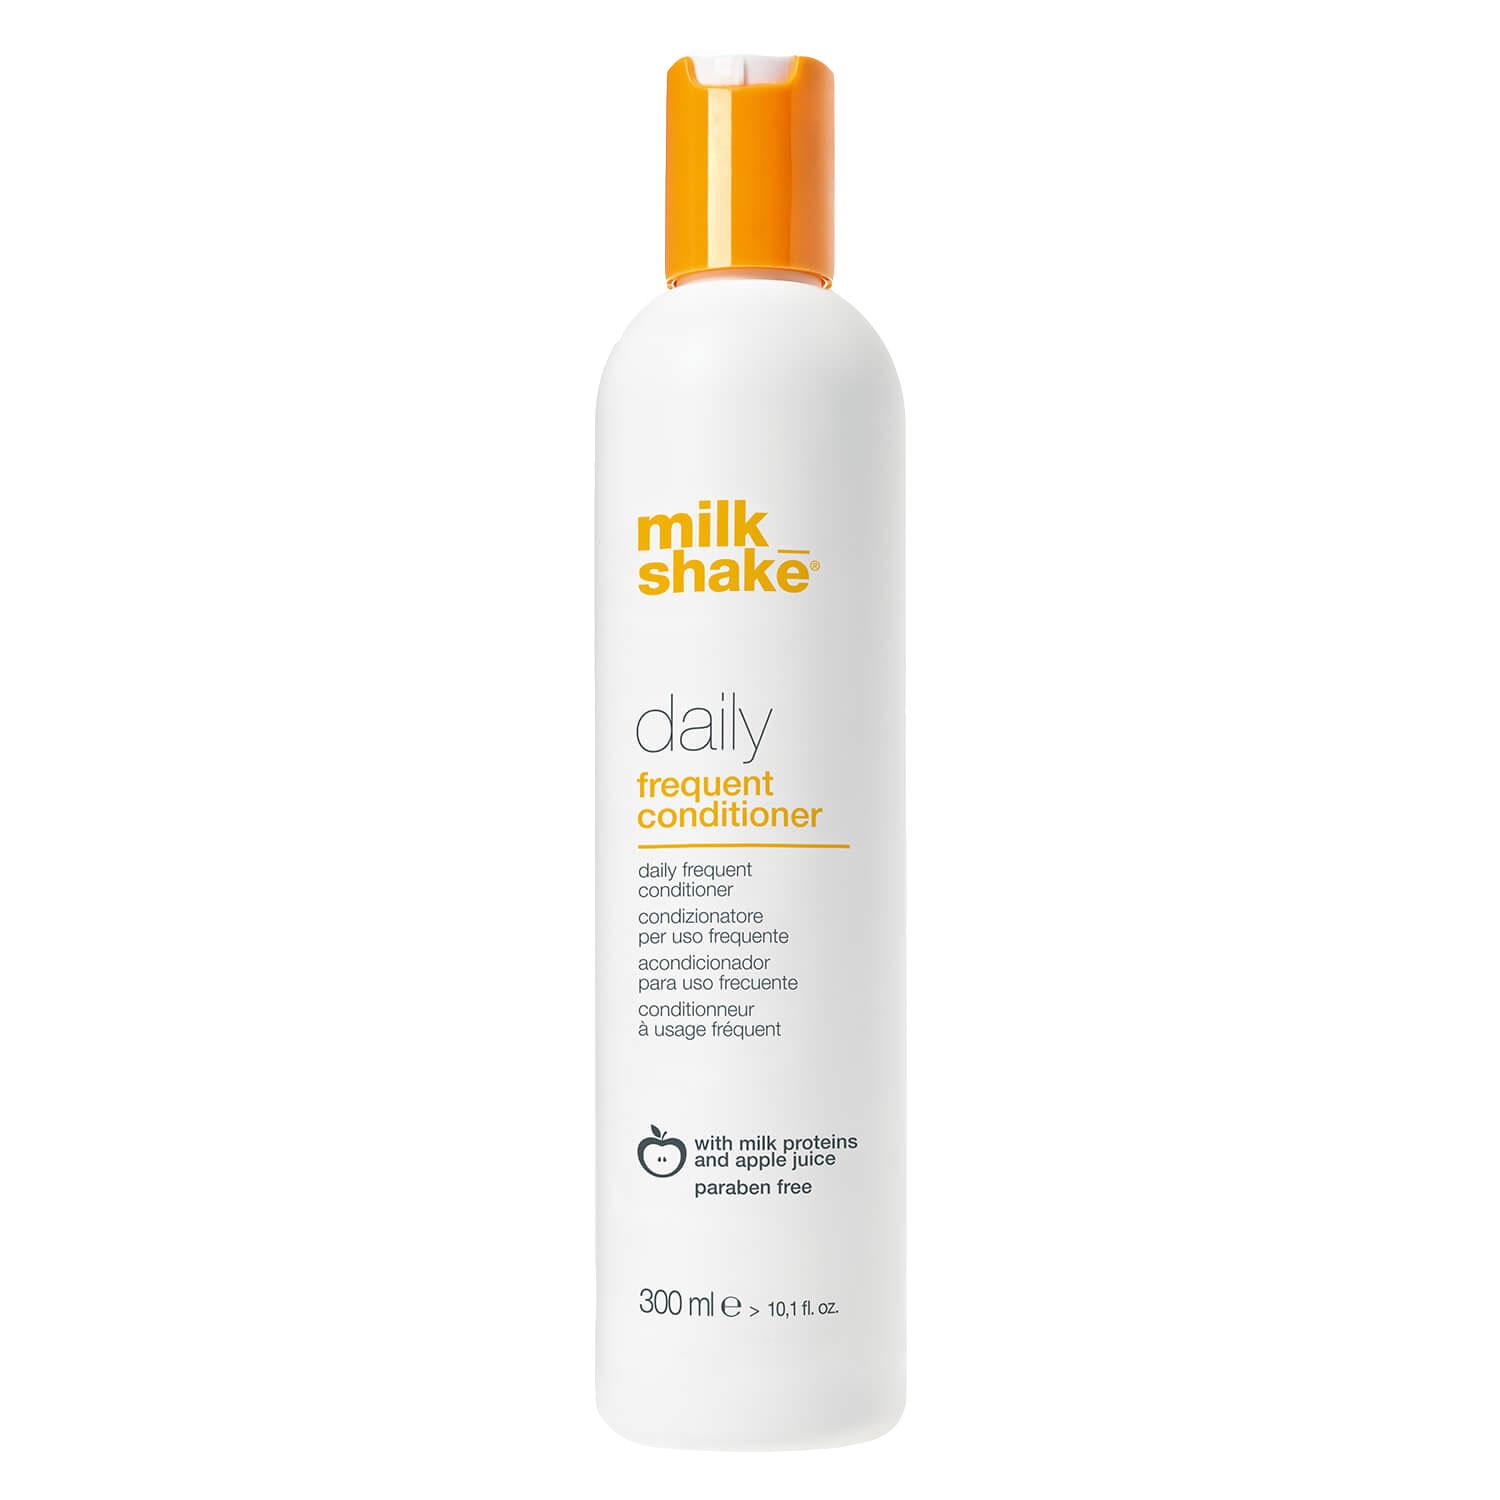 milk_shake daily - conditioner